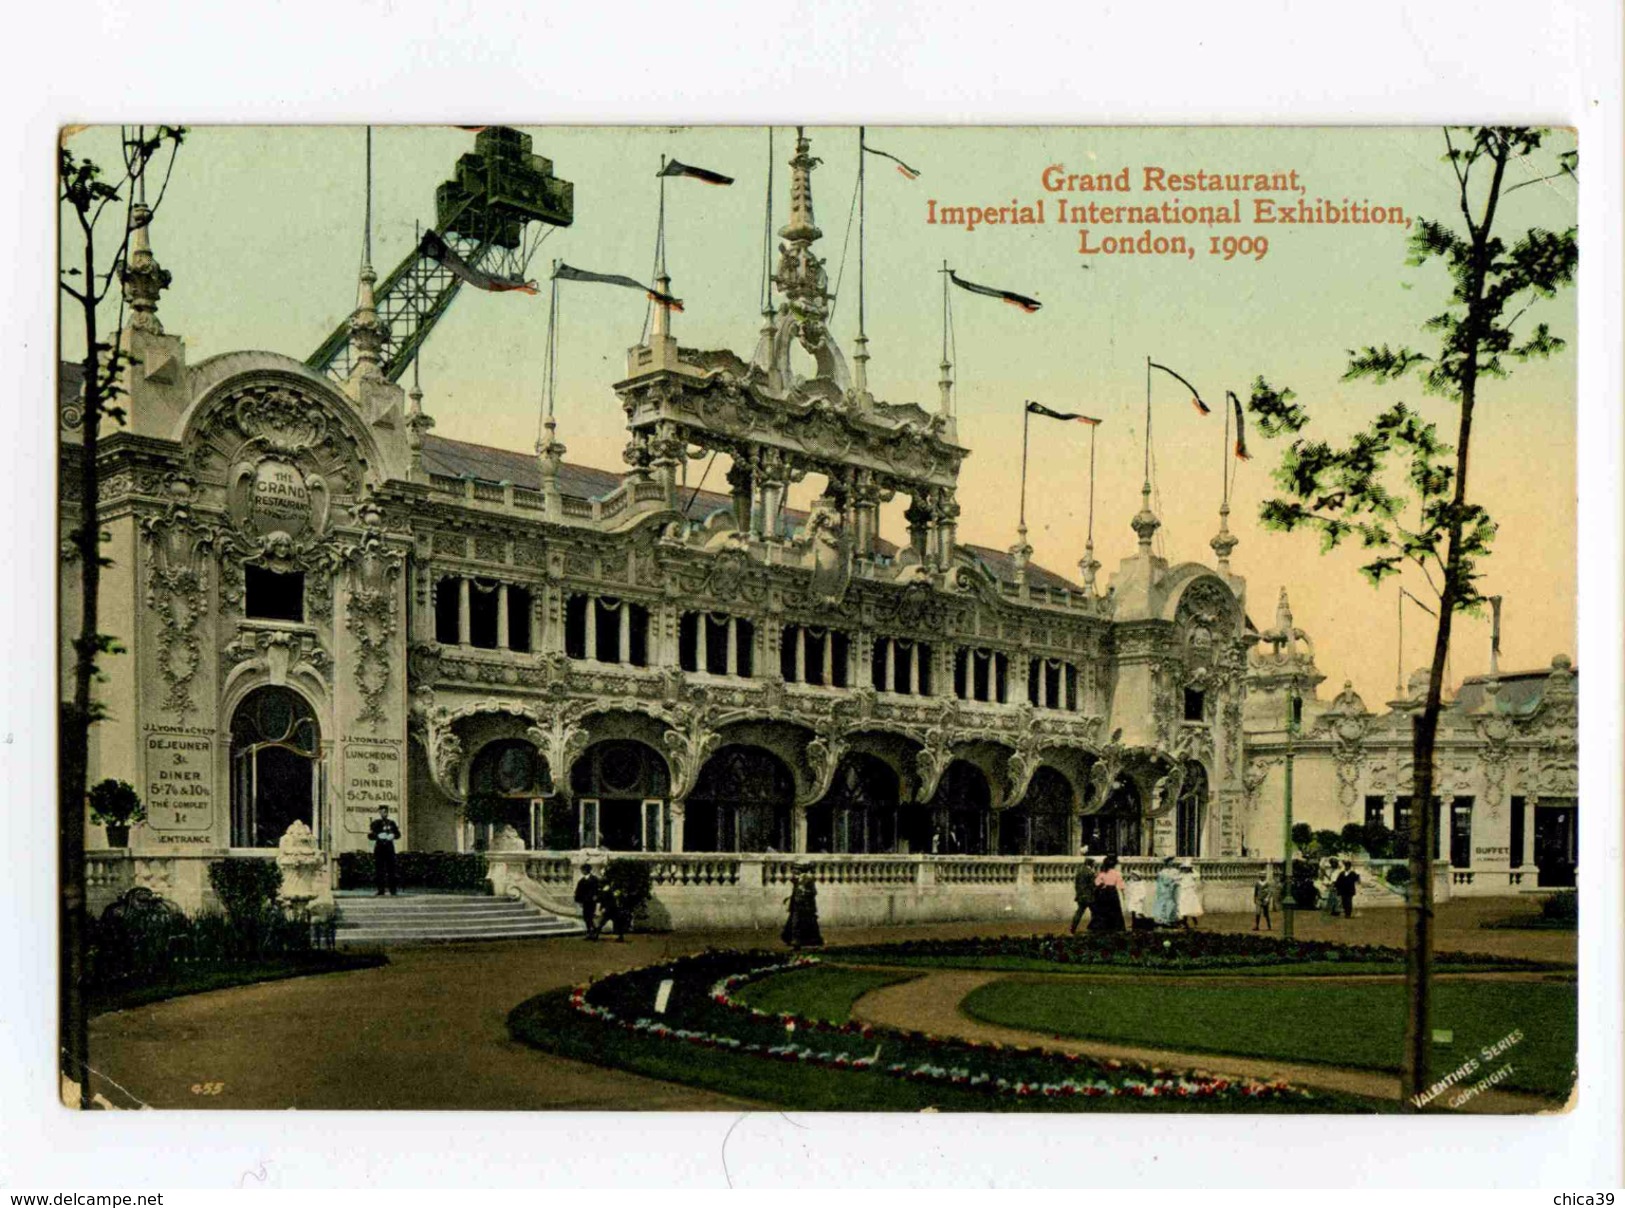 C 19664   -   London, 1909  -  Imperial International Exhibition   -   Grand Restaurant - Exhibitions